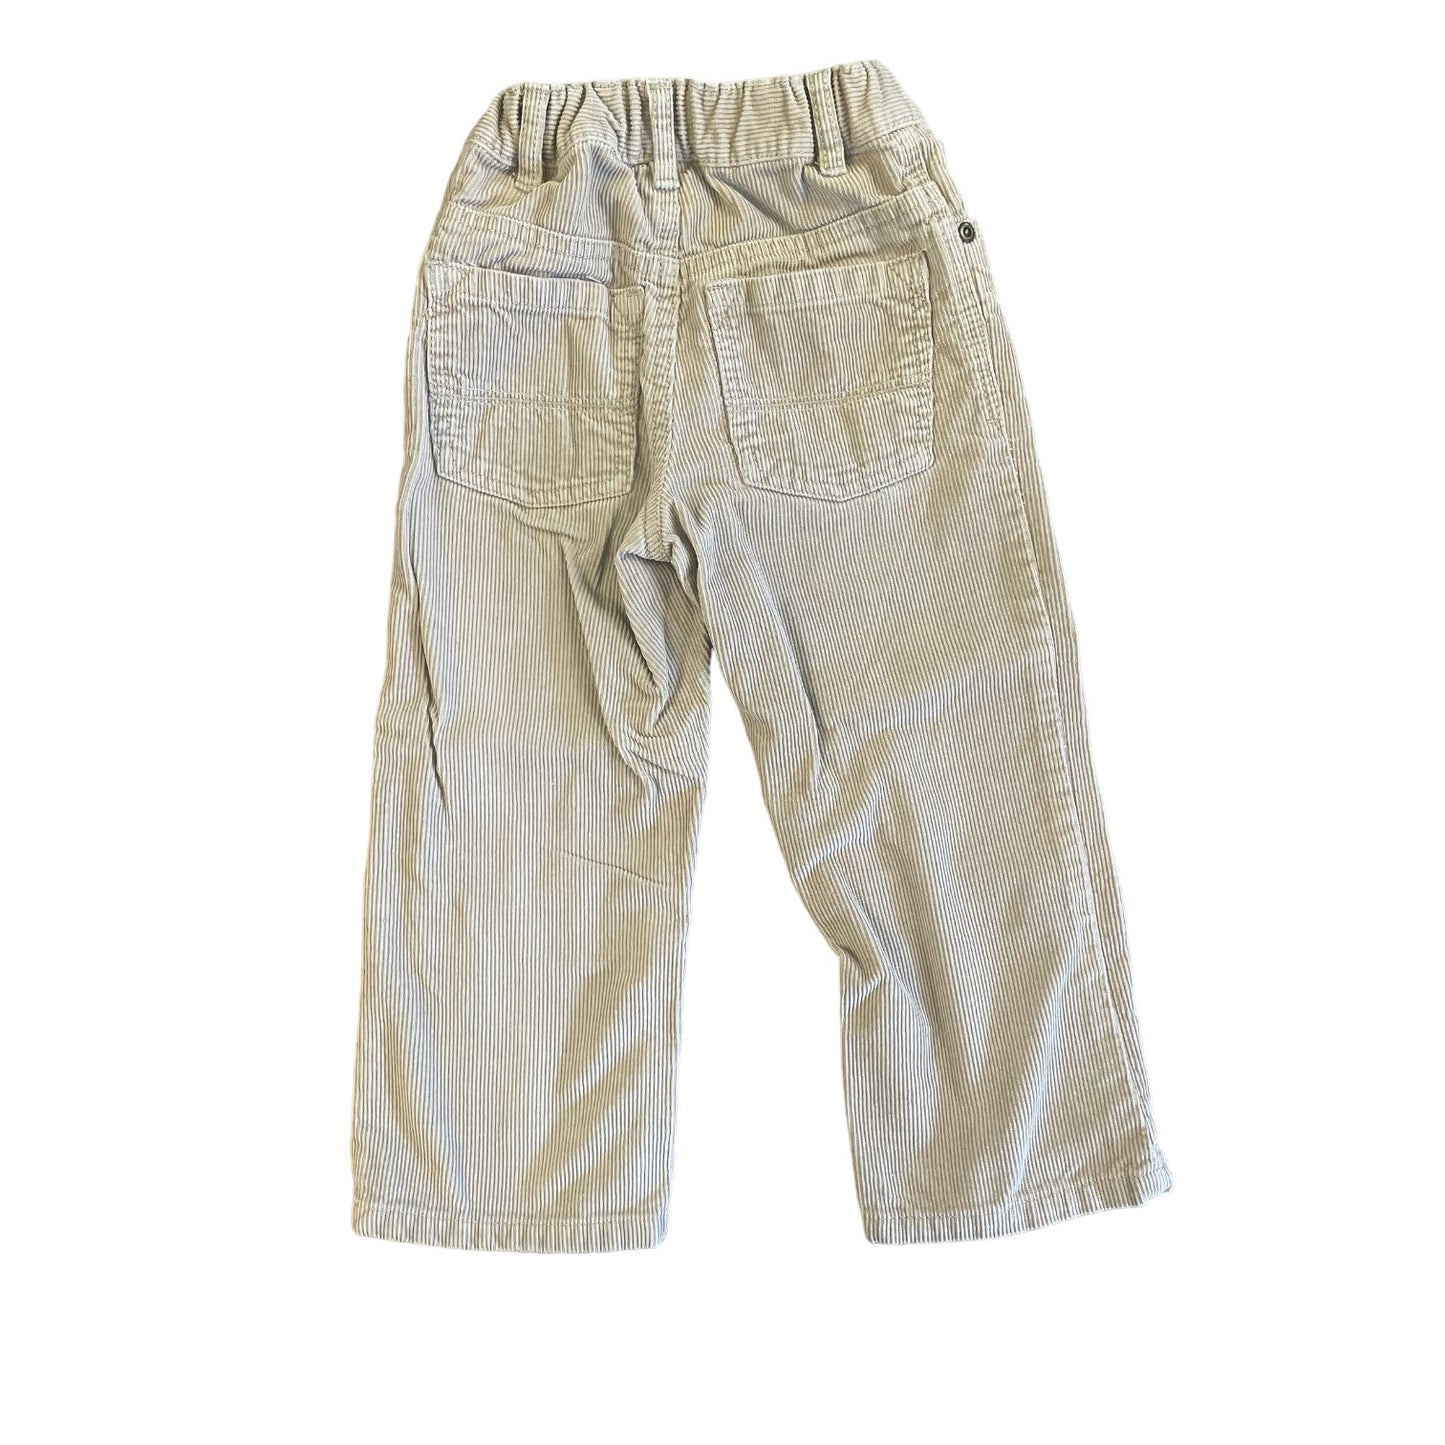 Cherokee Boys Corduroy Pants Size 3T